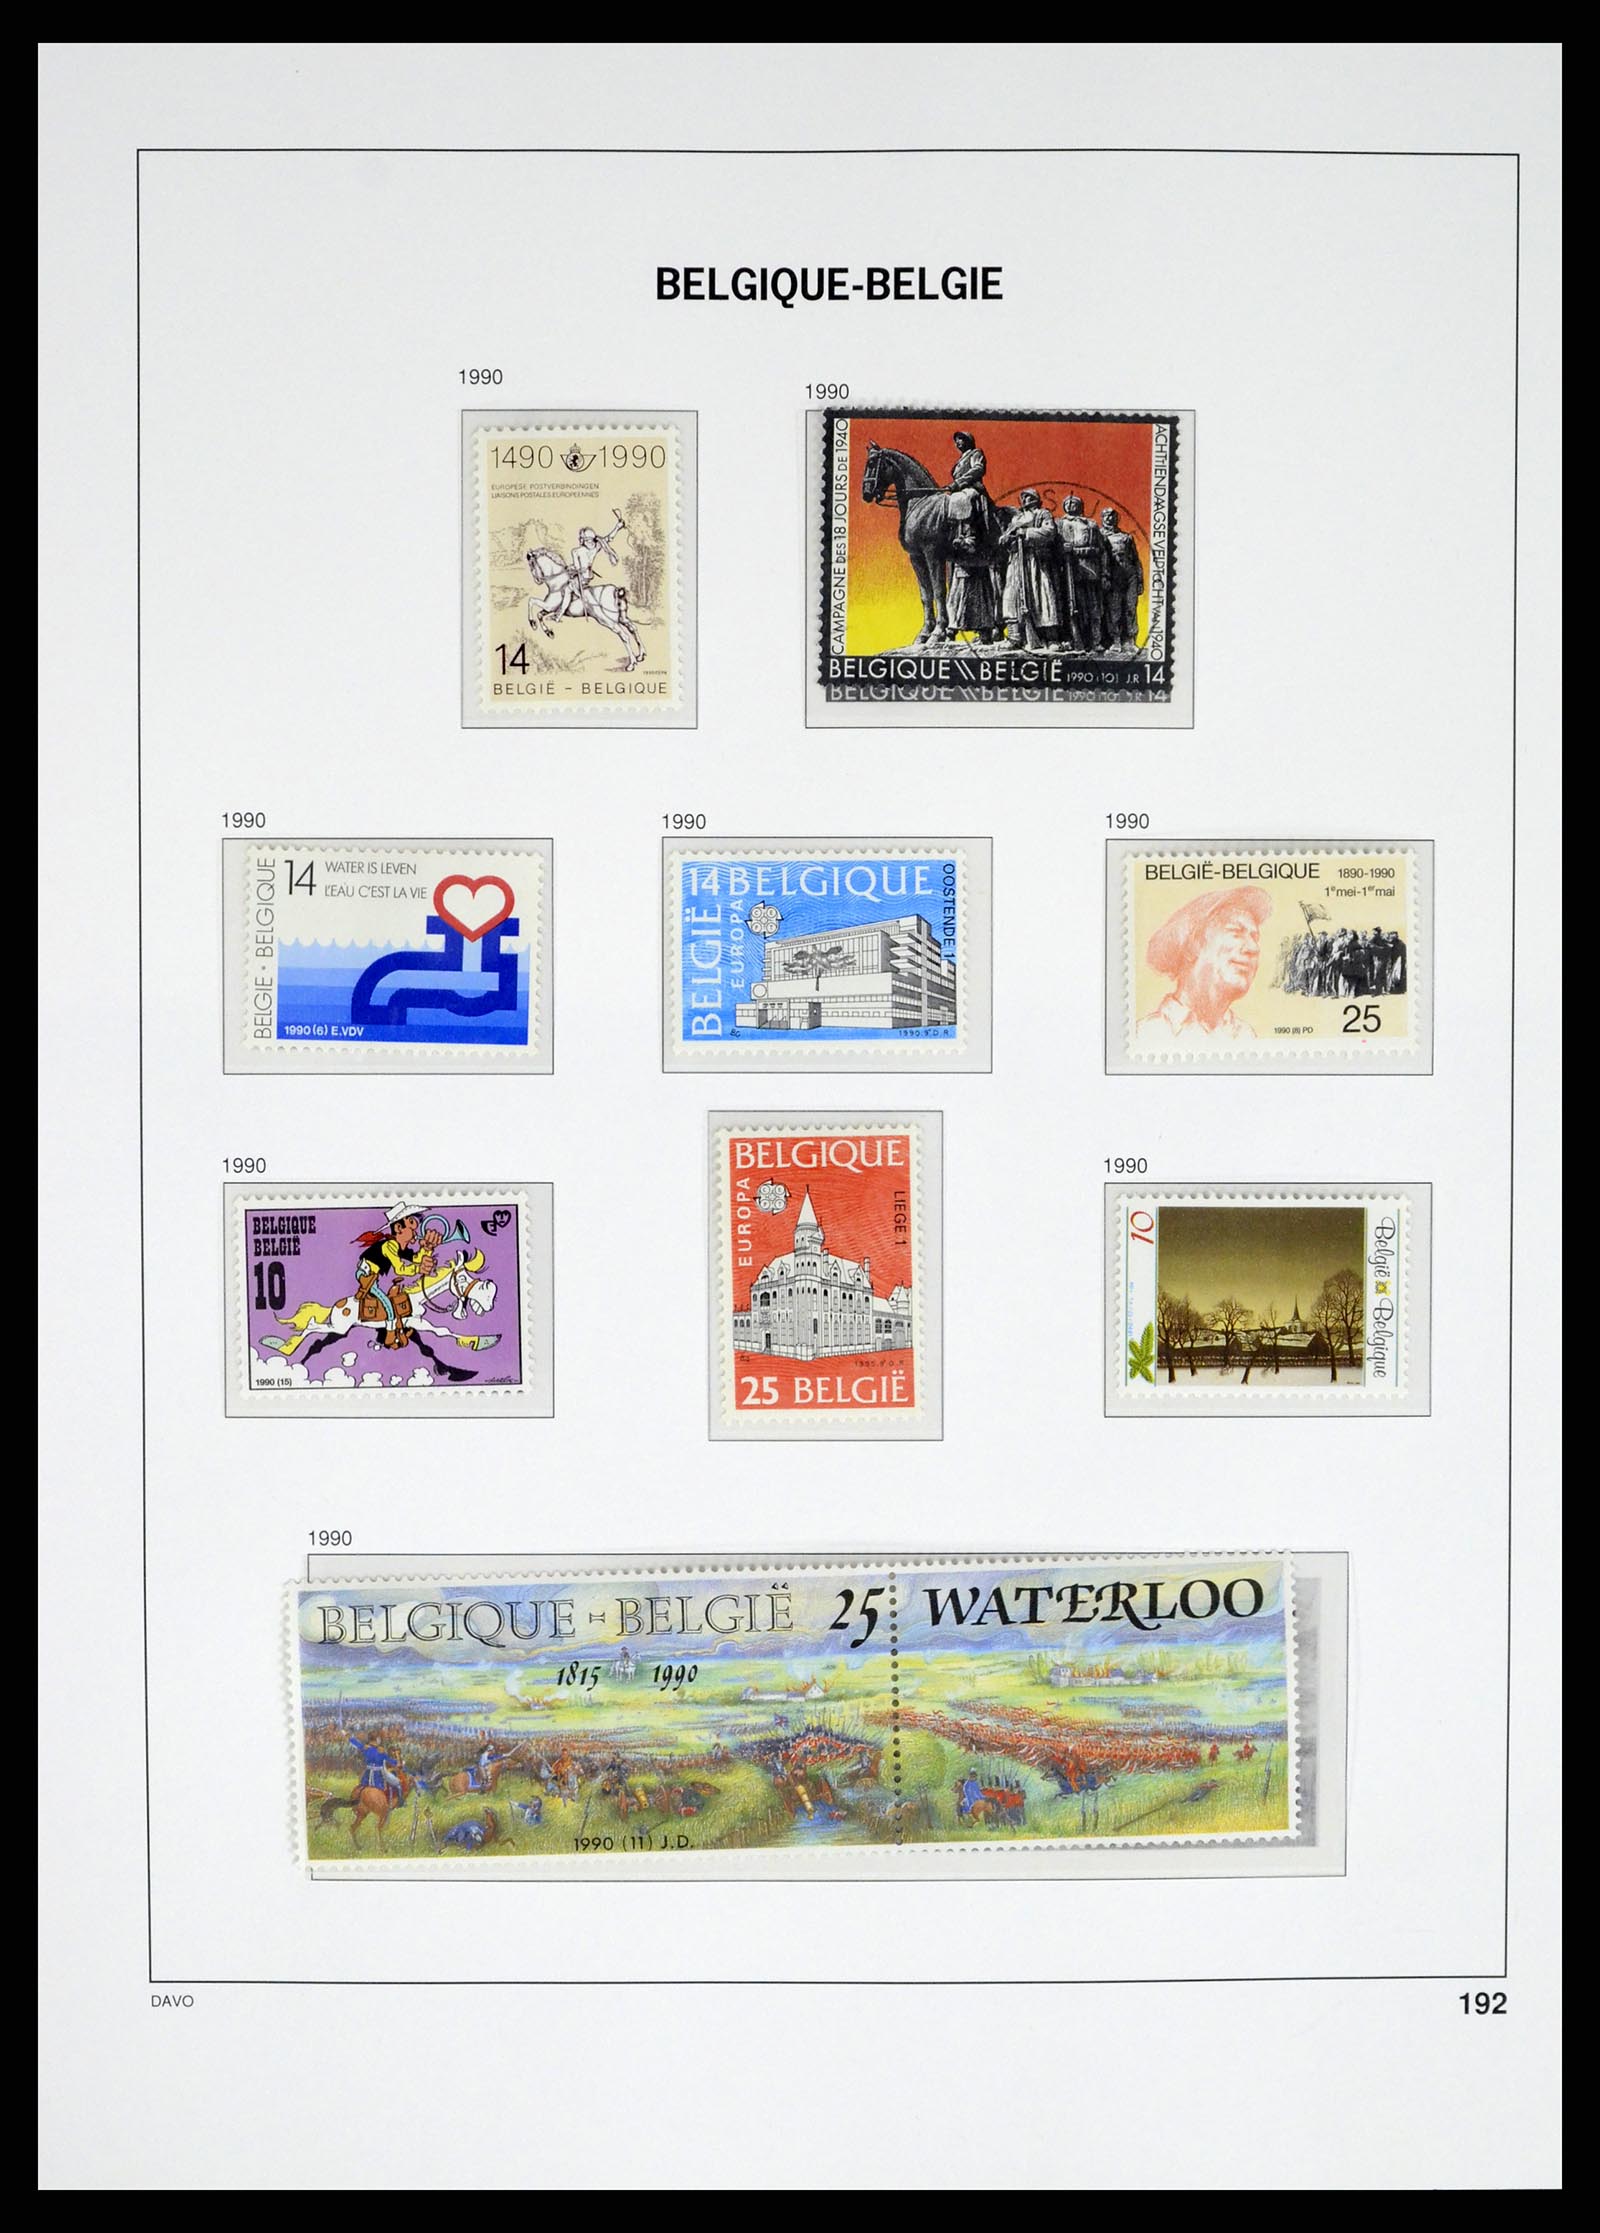 37368 093 - Stamp collection 37368 Belgium 1969-2003.